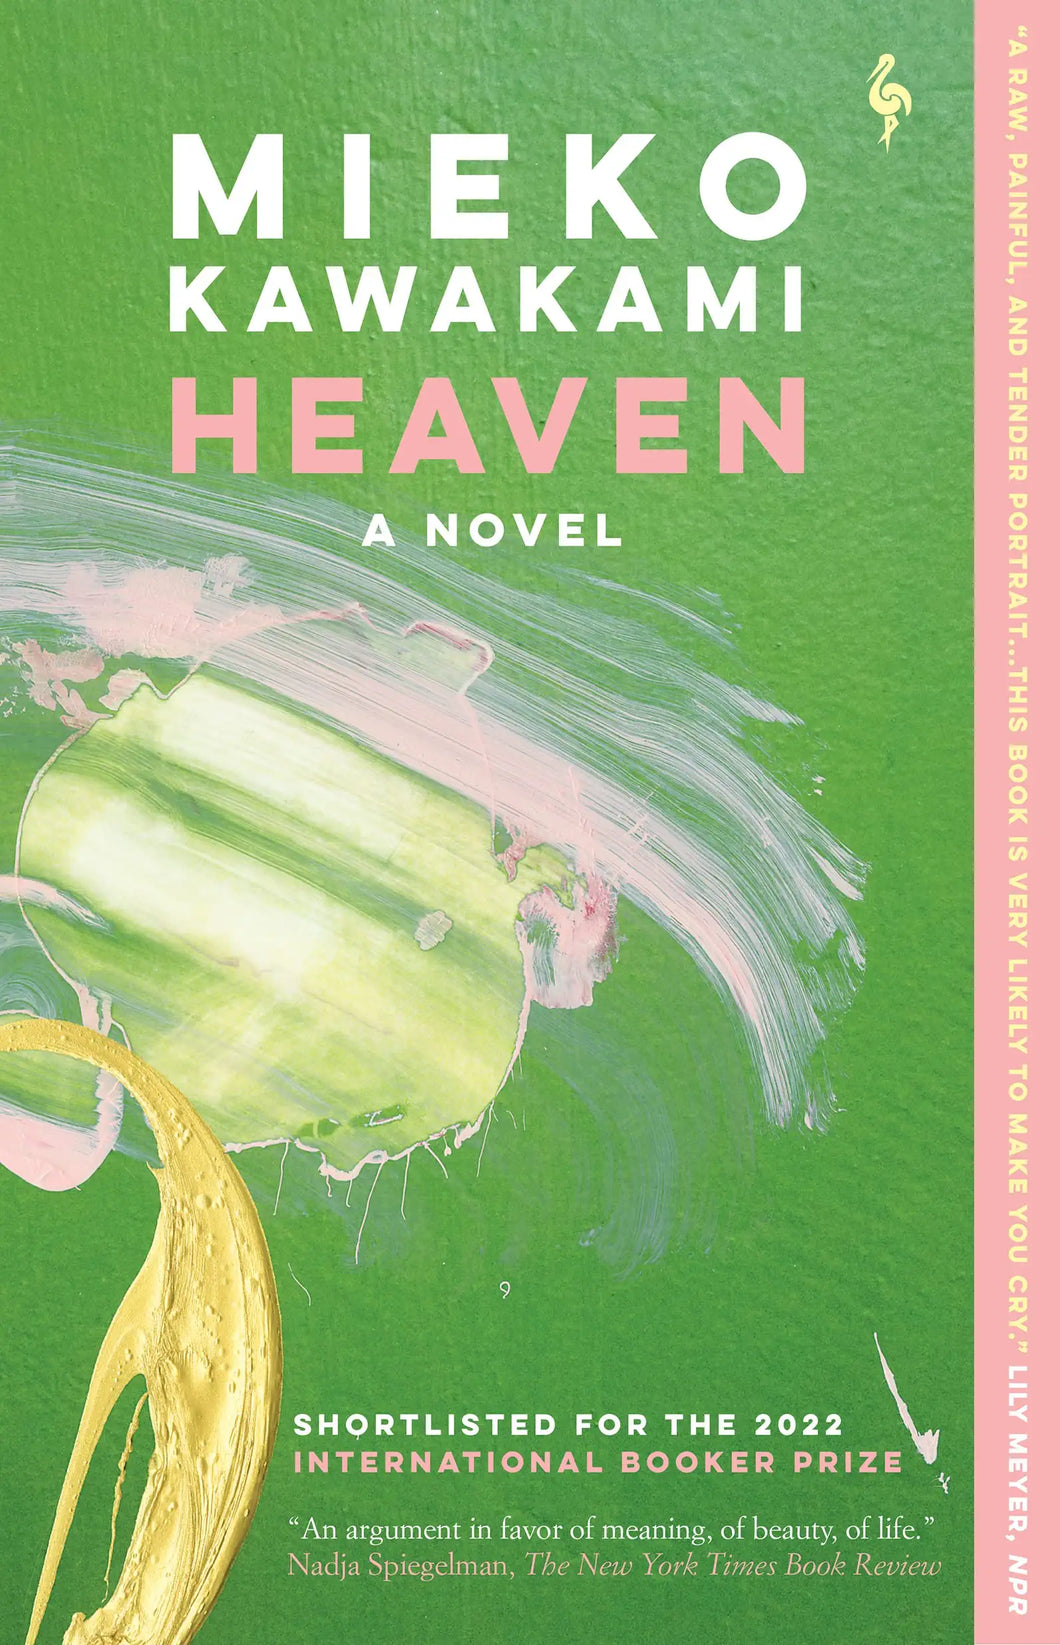 Heaven: A Novel by Mieko Kawakami